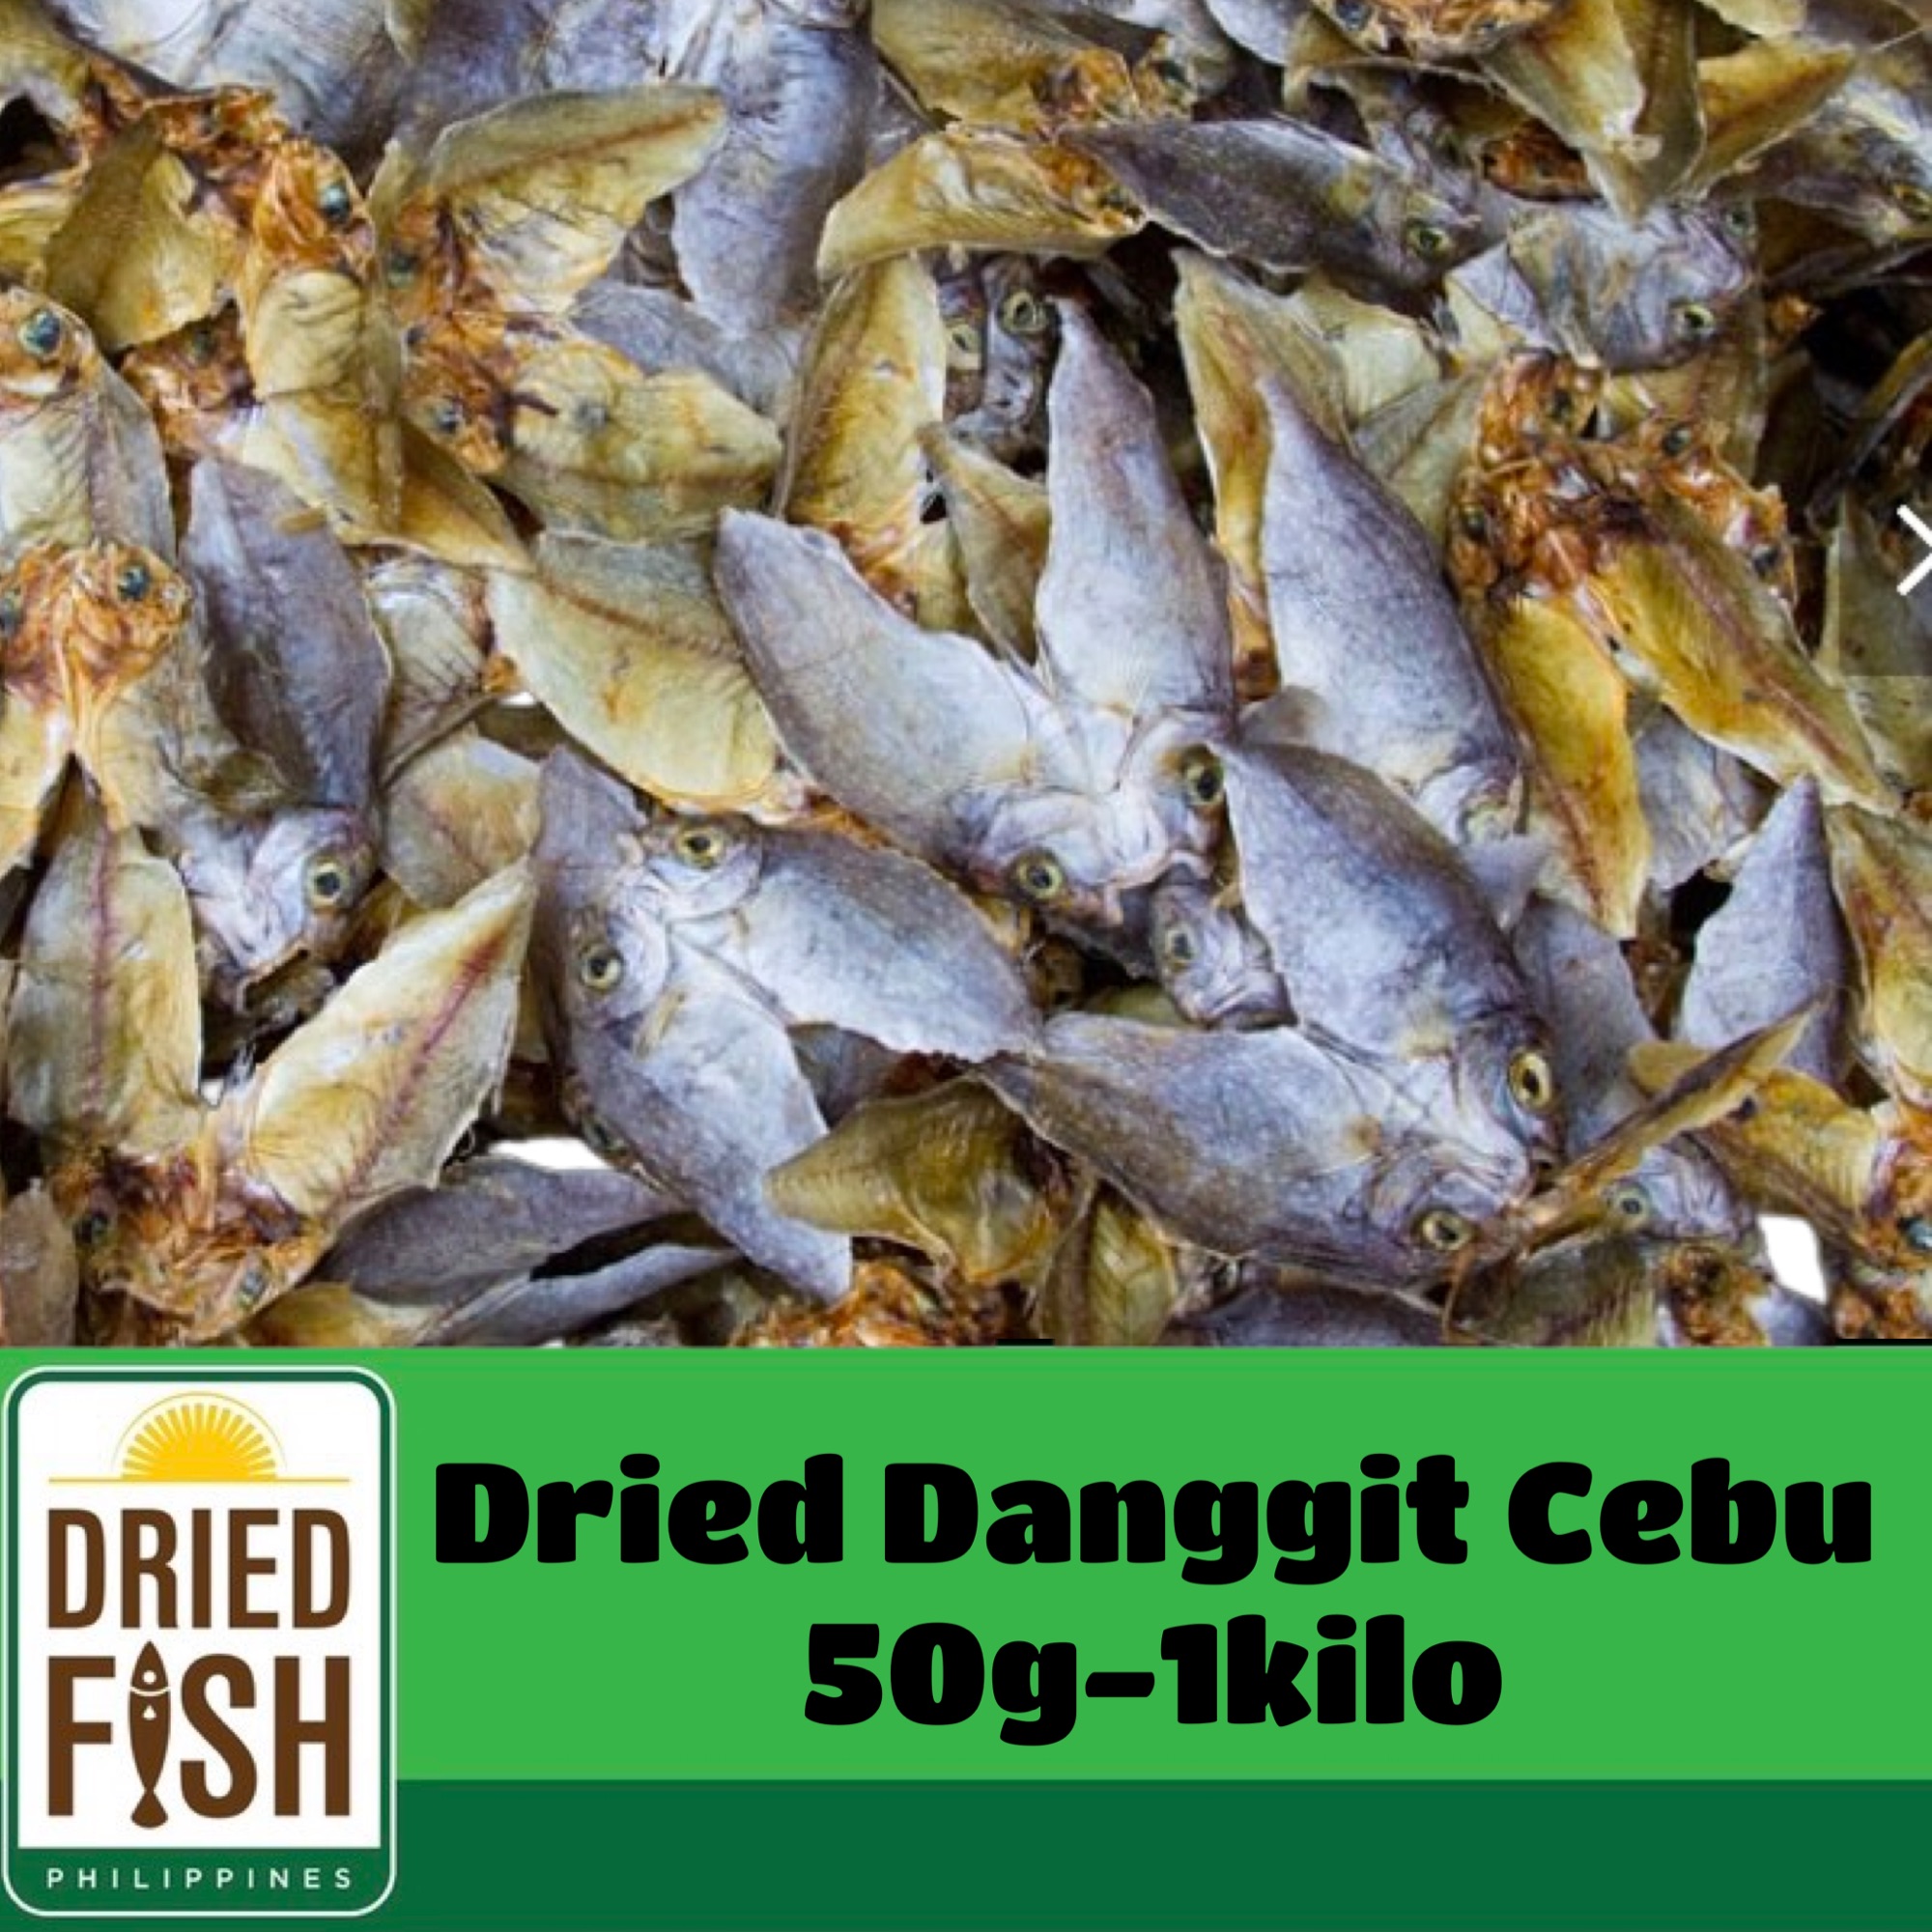 DFP Dried Fish Danggit Cebu 50g,100g, 250g, 500g & 1kilo VACUUM SEALED